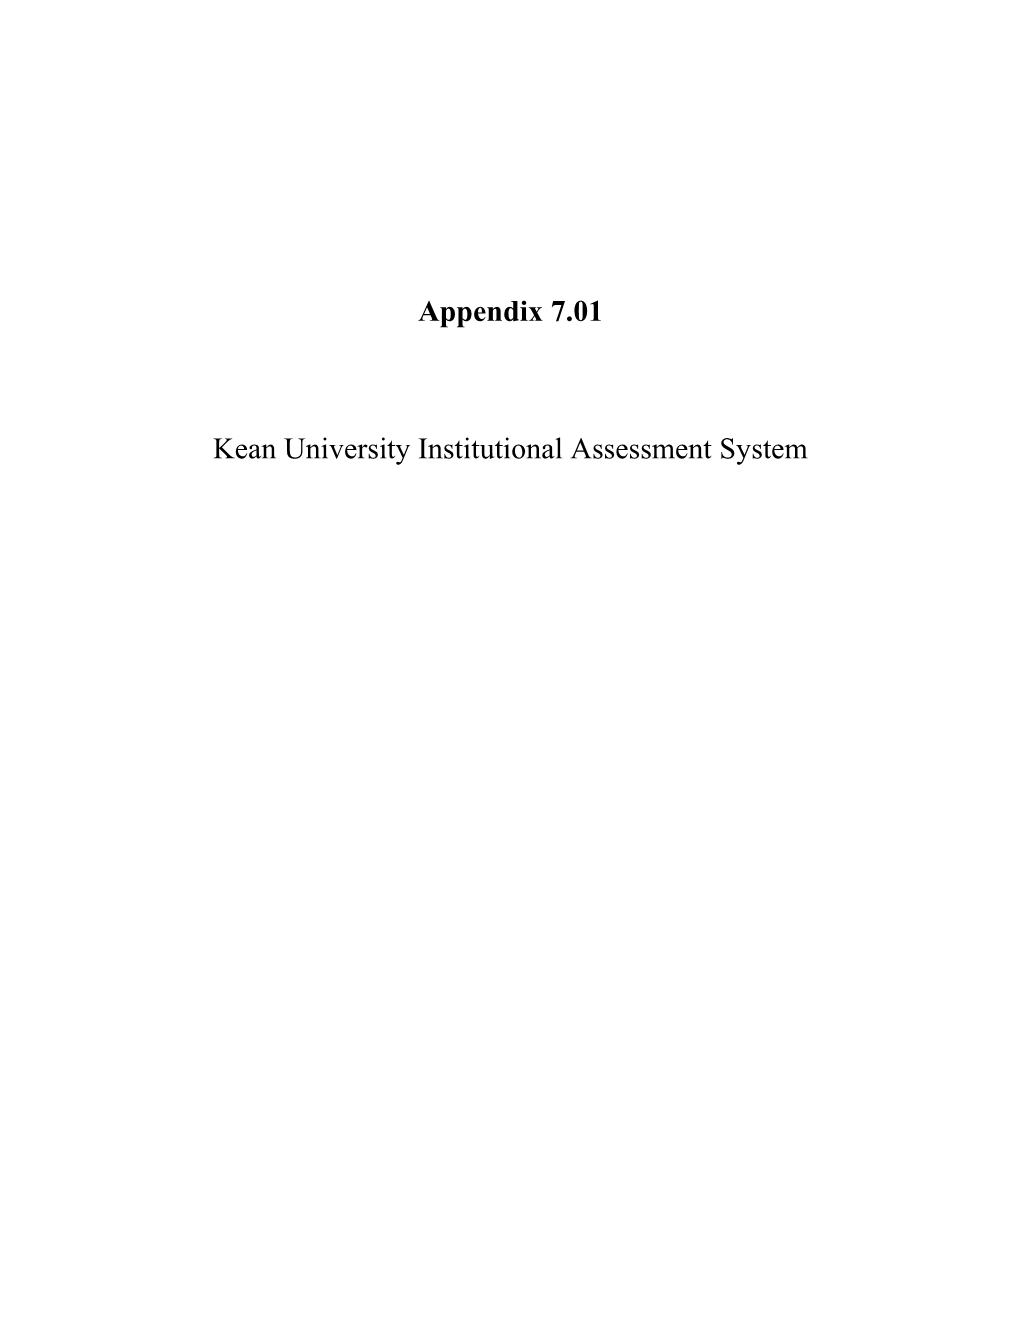 Appendix 7.01 Kean University Institutional Assessment System